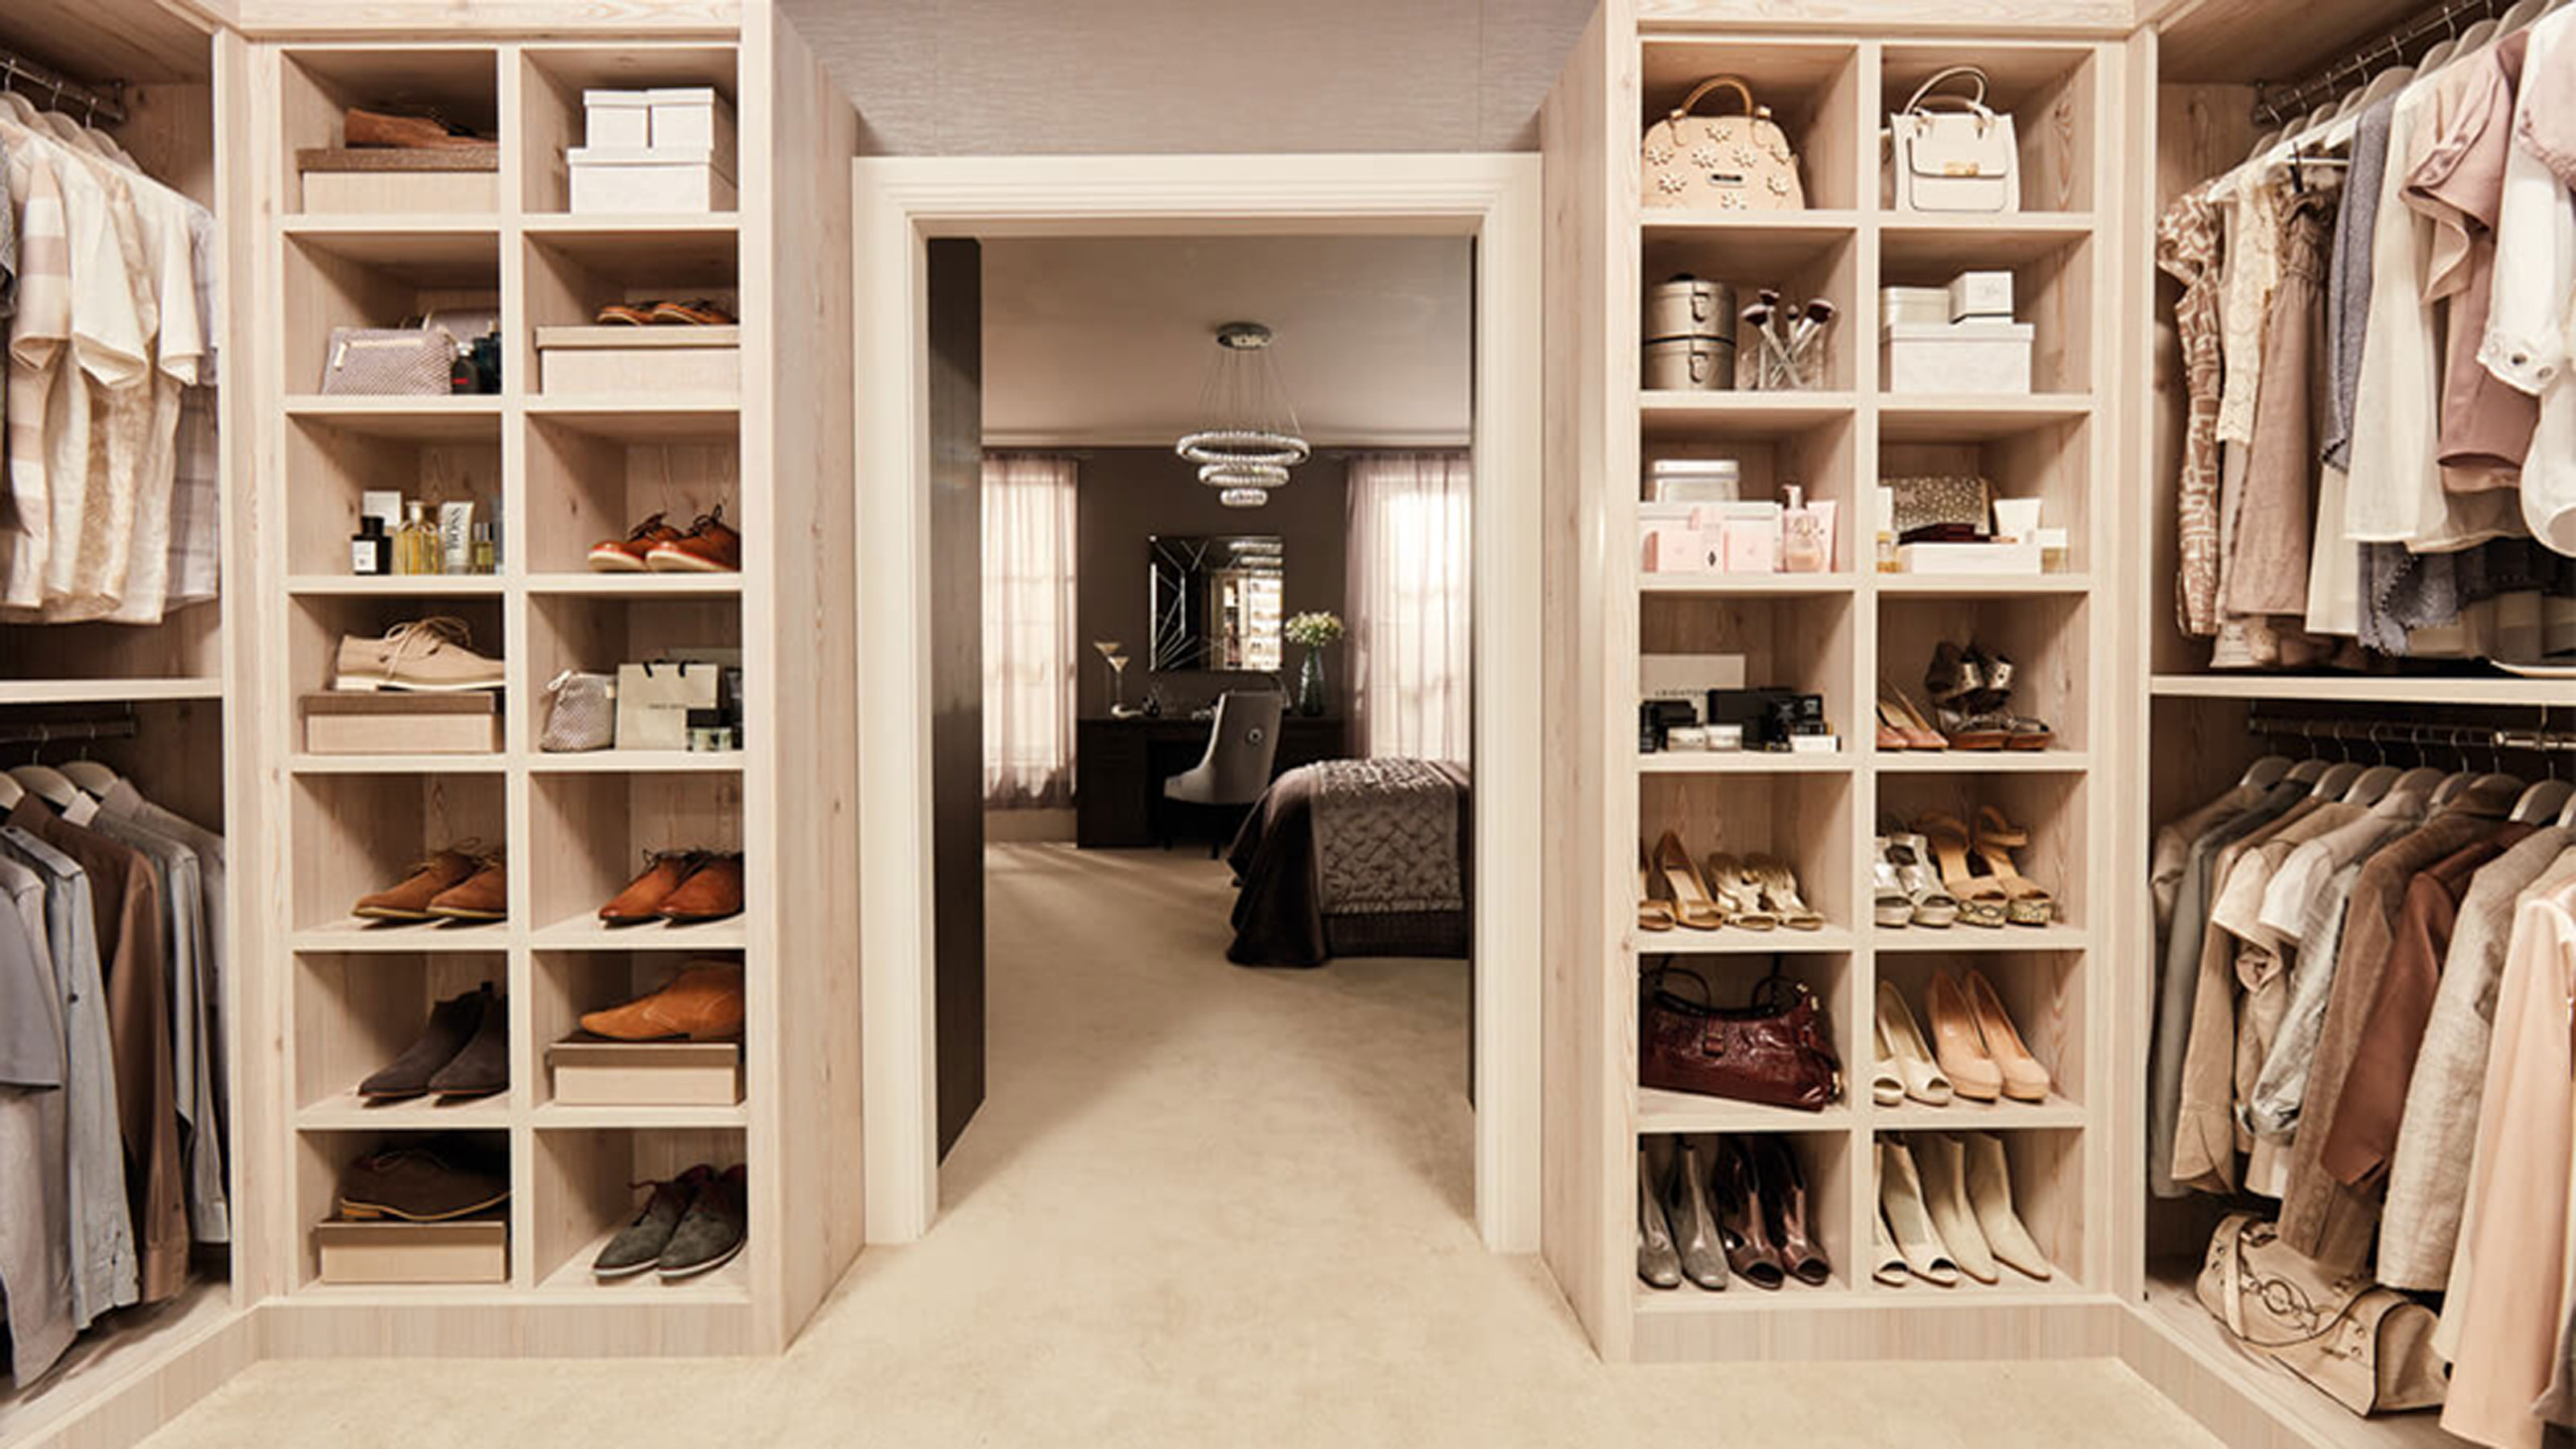 Wees Gaan Afscheiden How do you lay out a walk-in closet? Expert organizers advise 